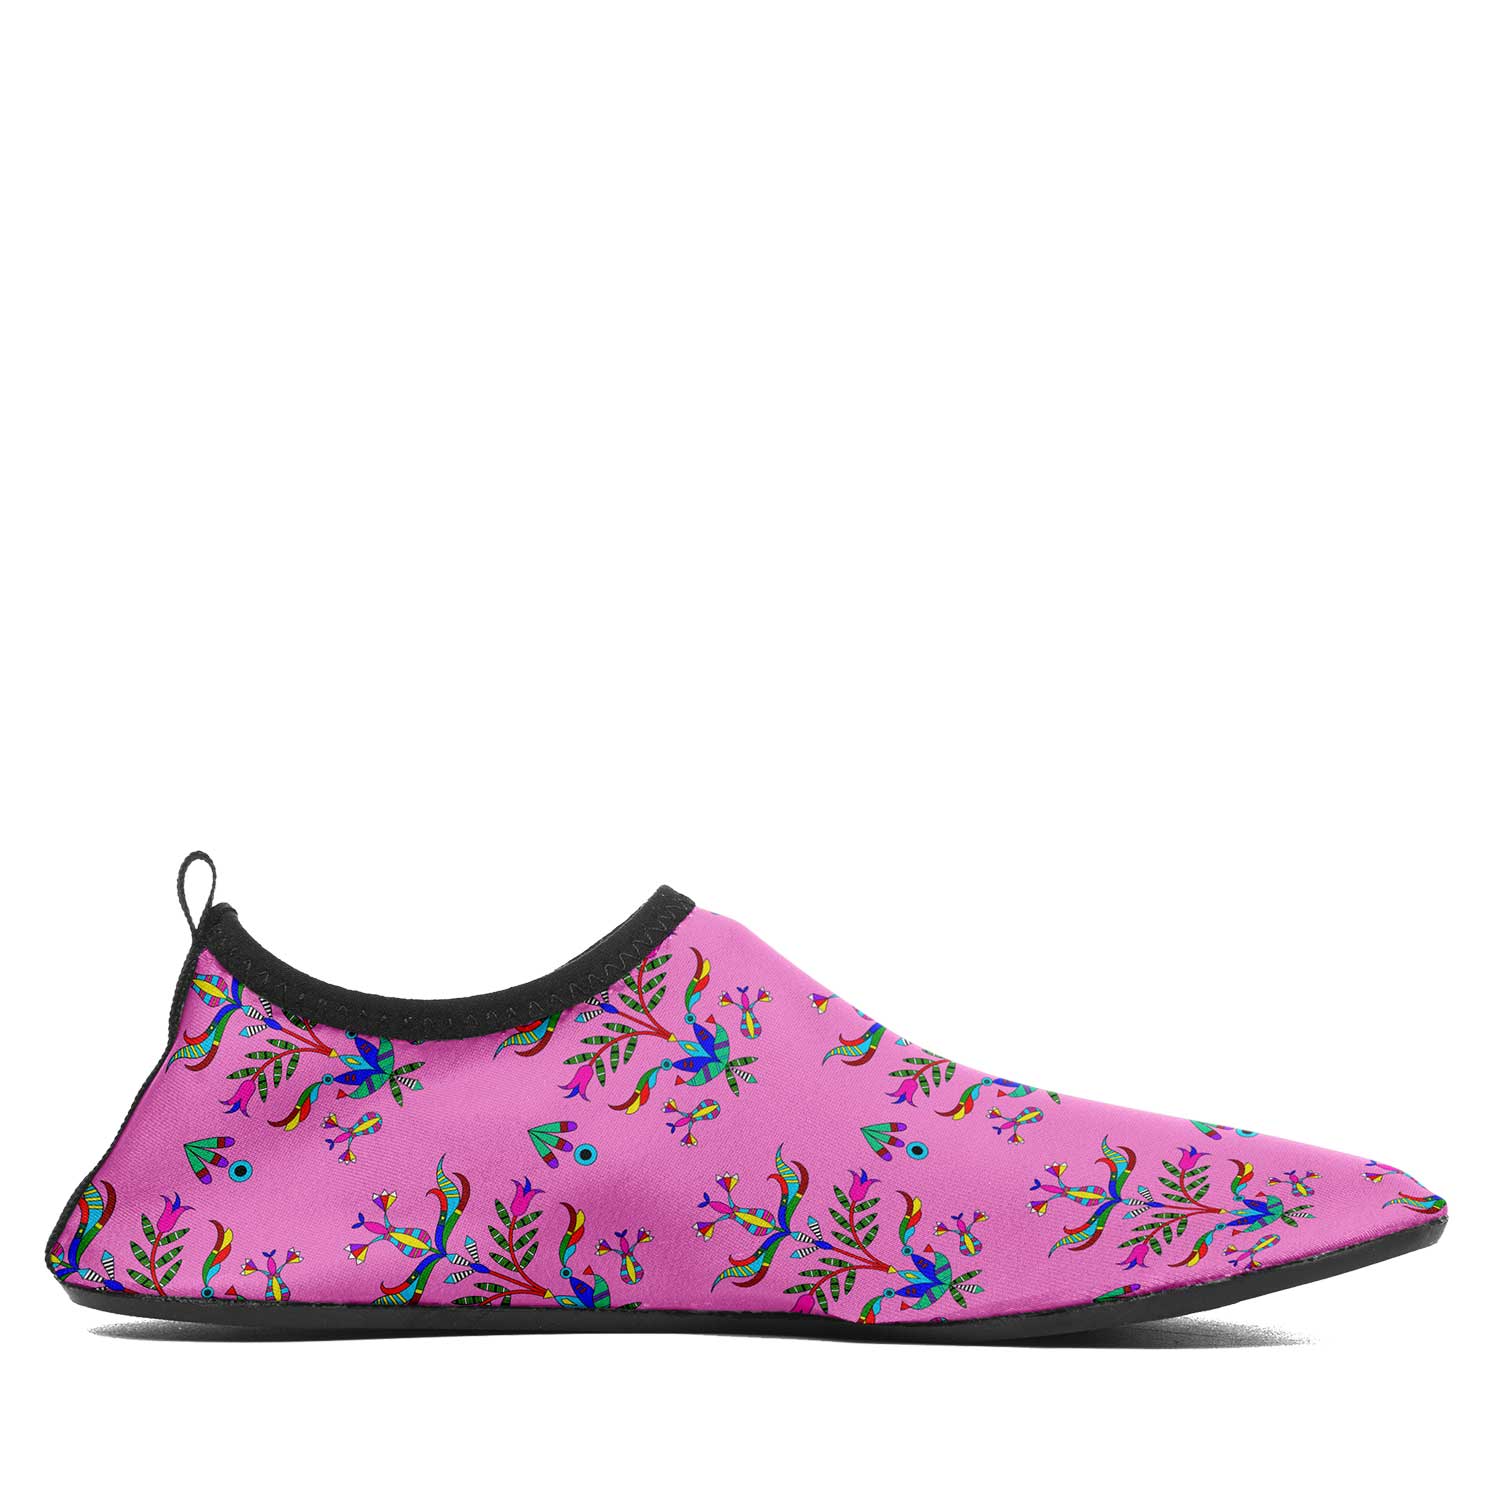 Dakota Damask Cheyenne Pink Kid's Sockamoccs Slip On Shoes